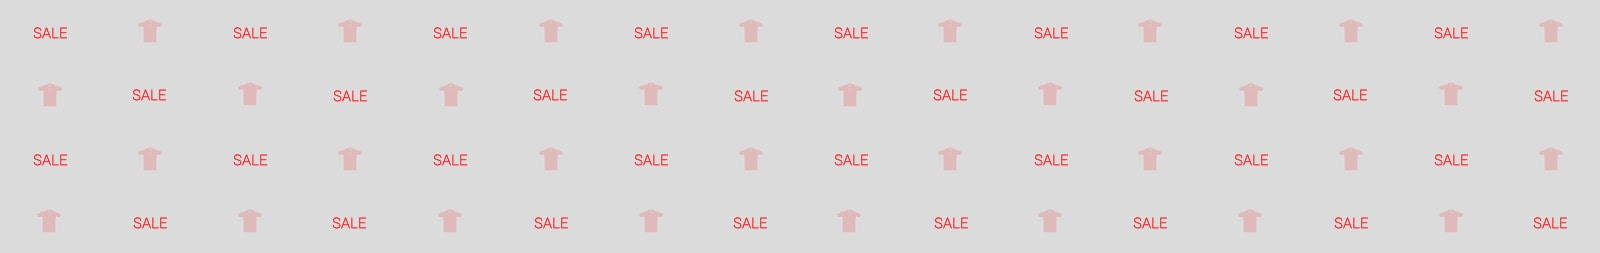 Sale Shirts